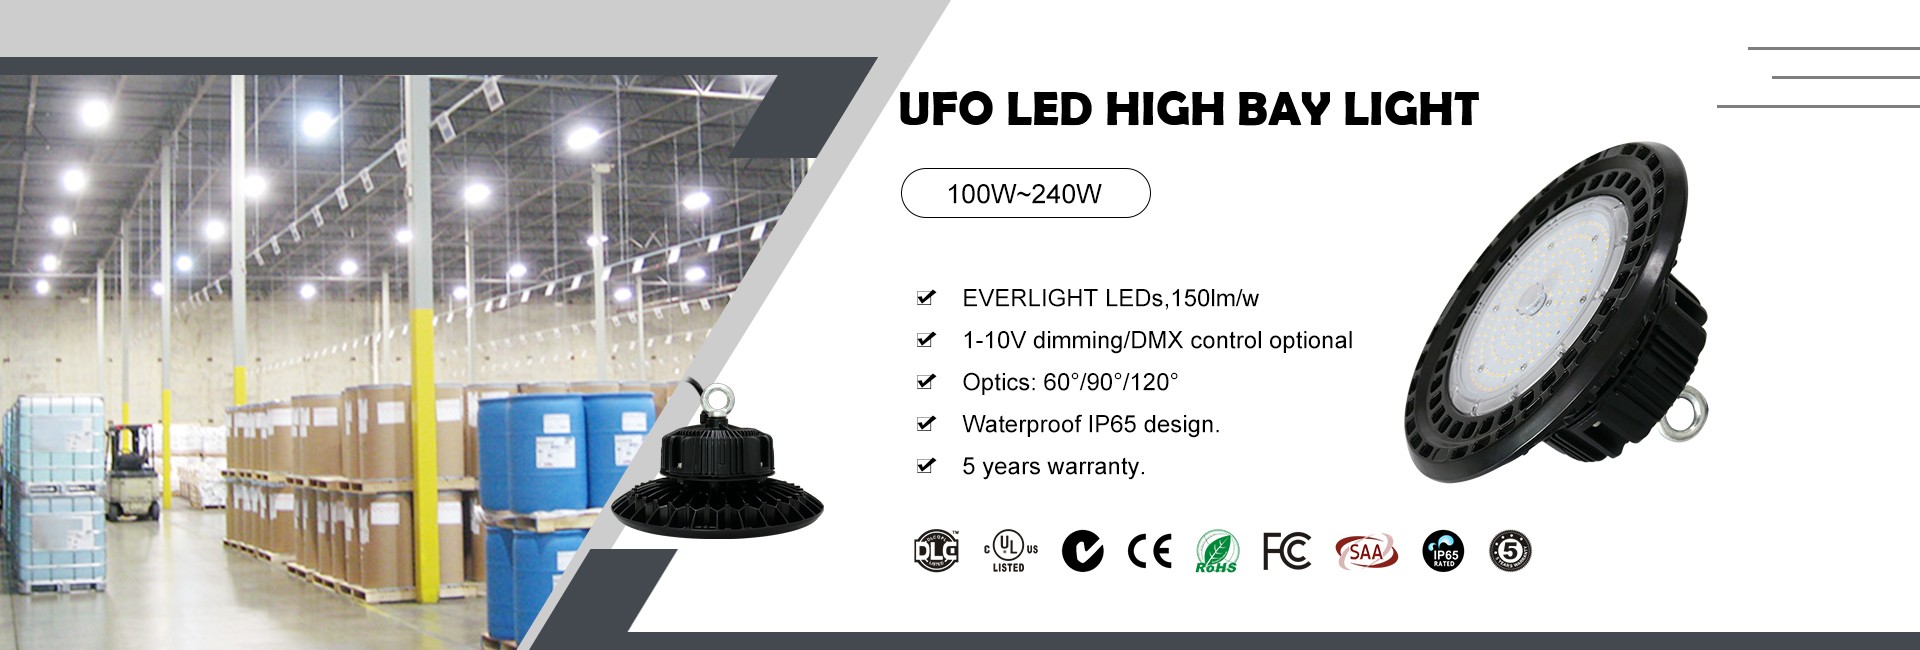 UFO LED High Bay Light